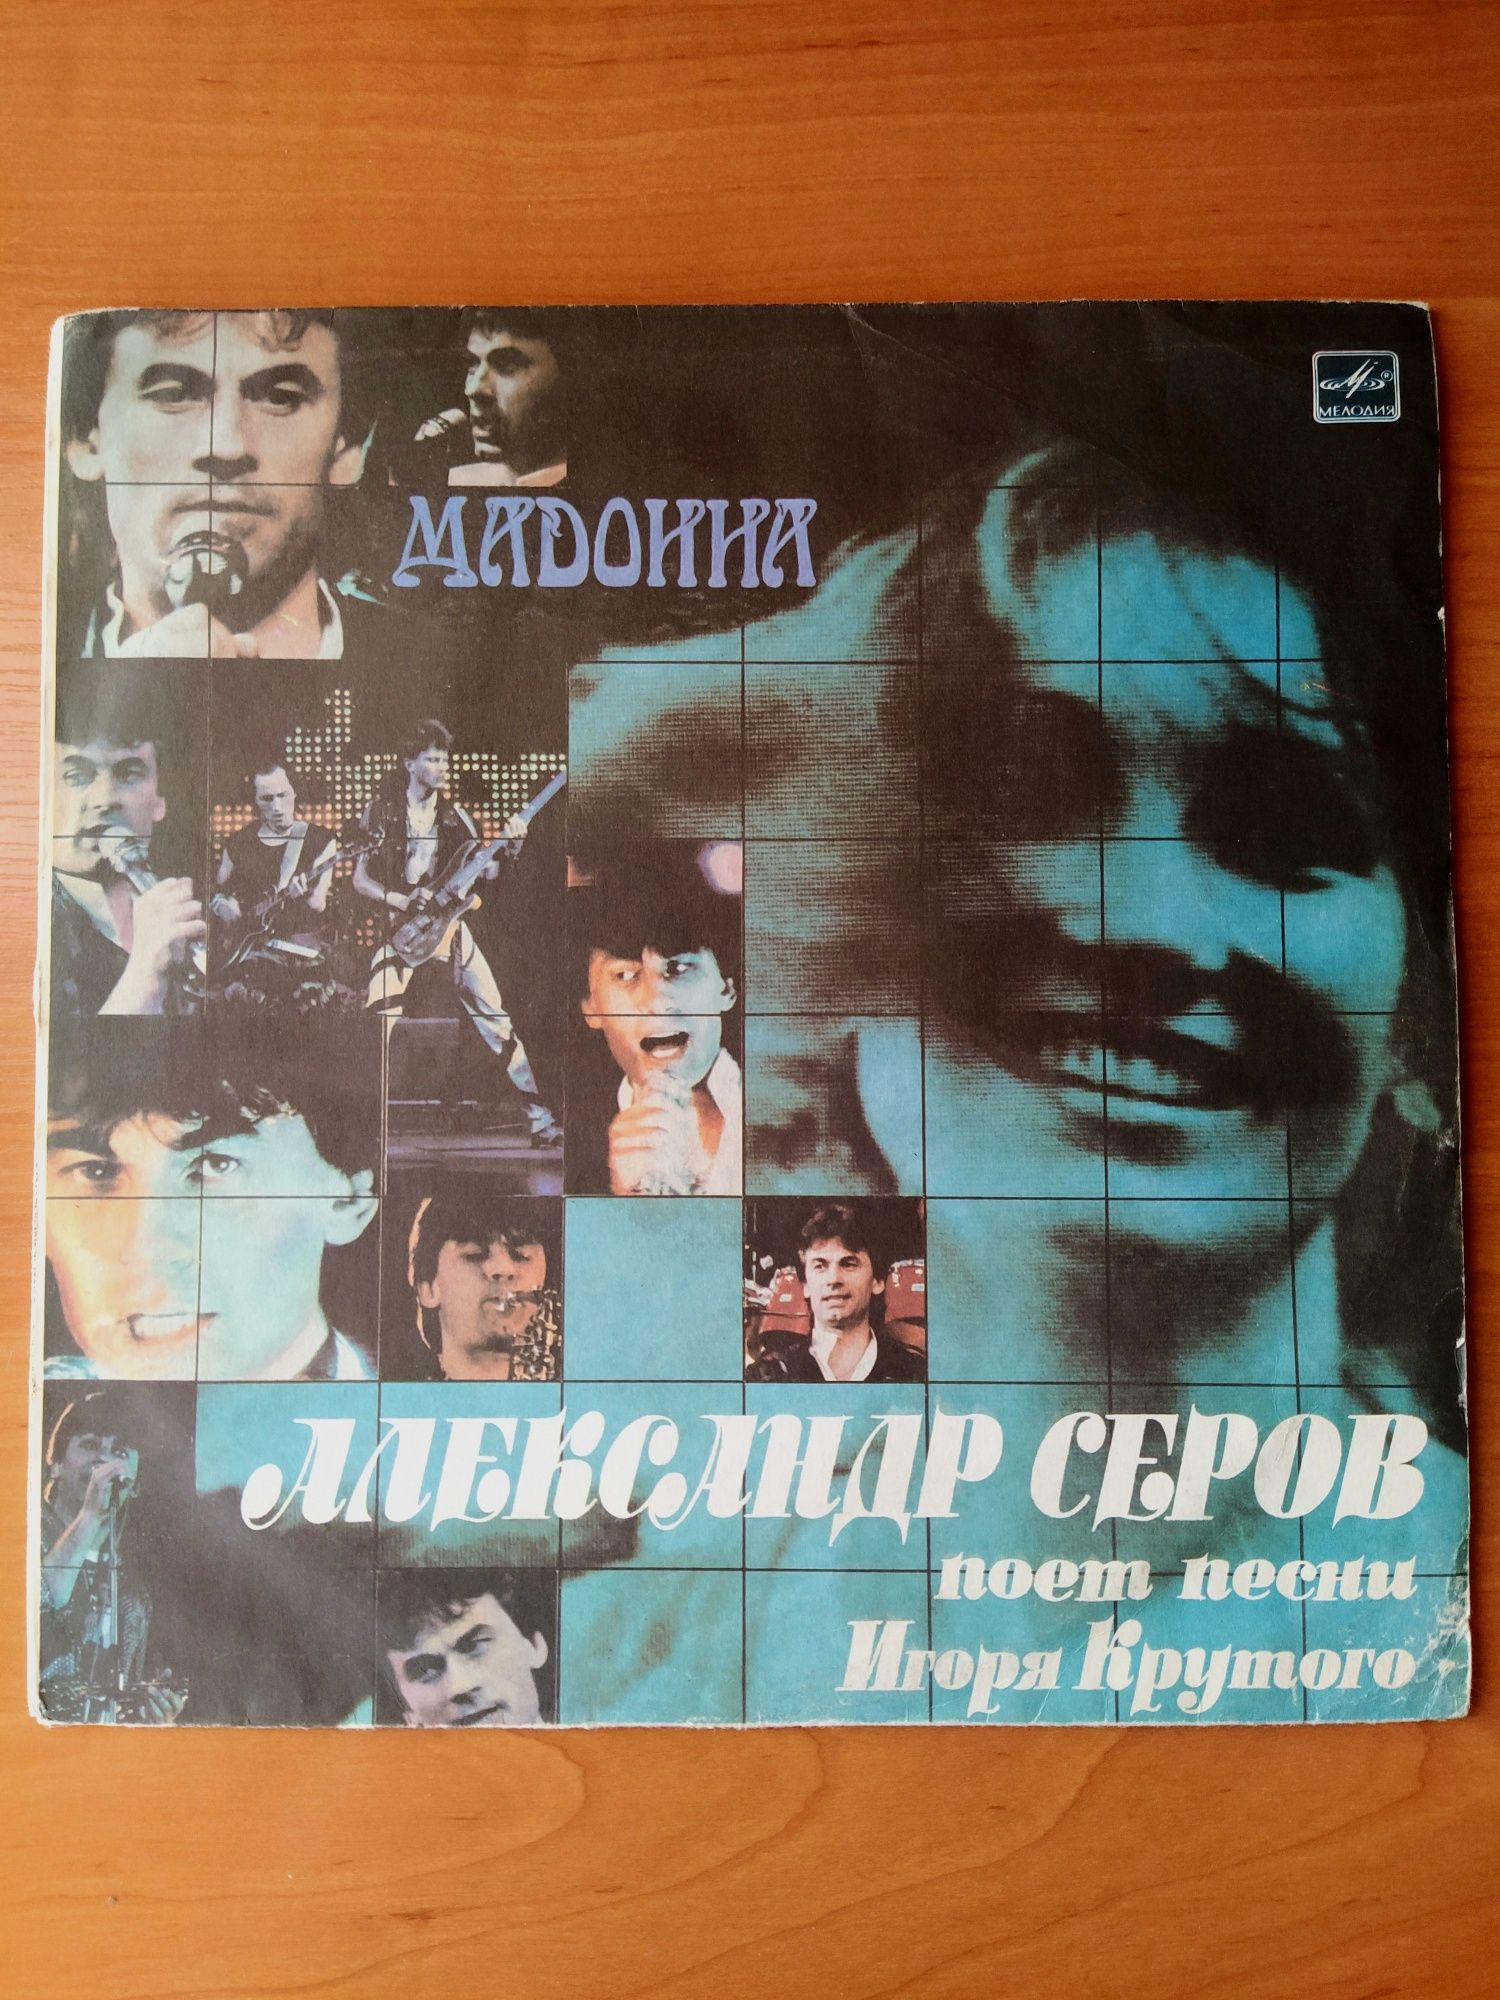 Виниловая пластинка Александр Серов - Мадонна